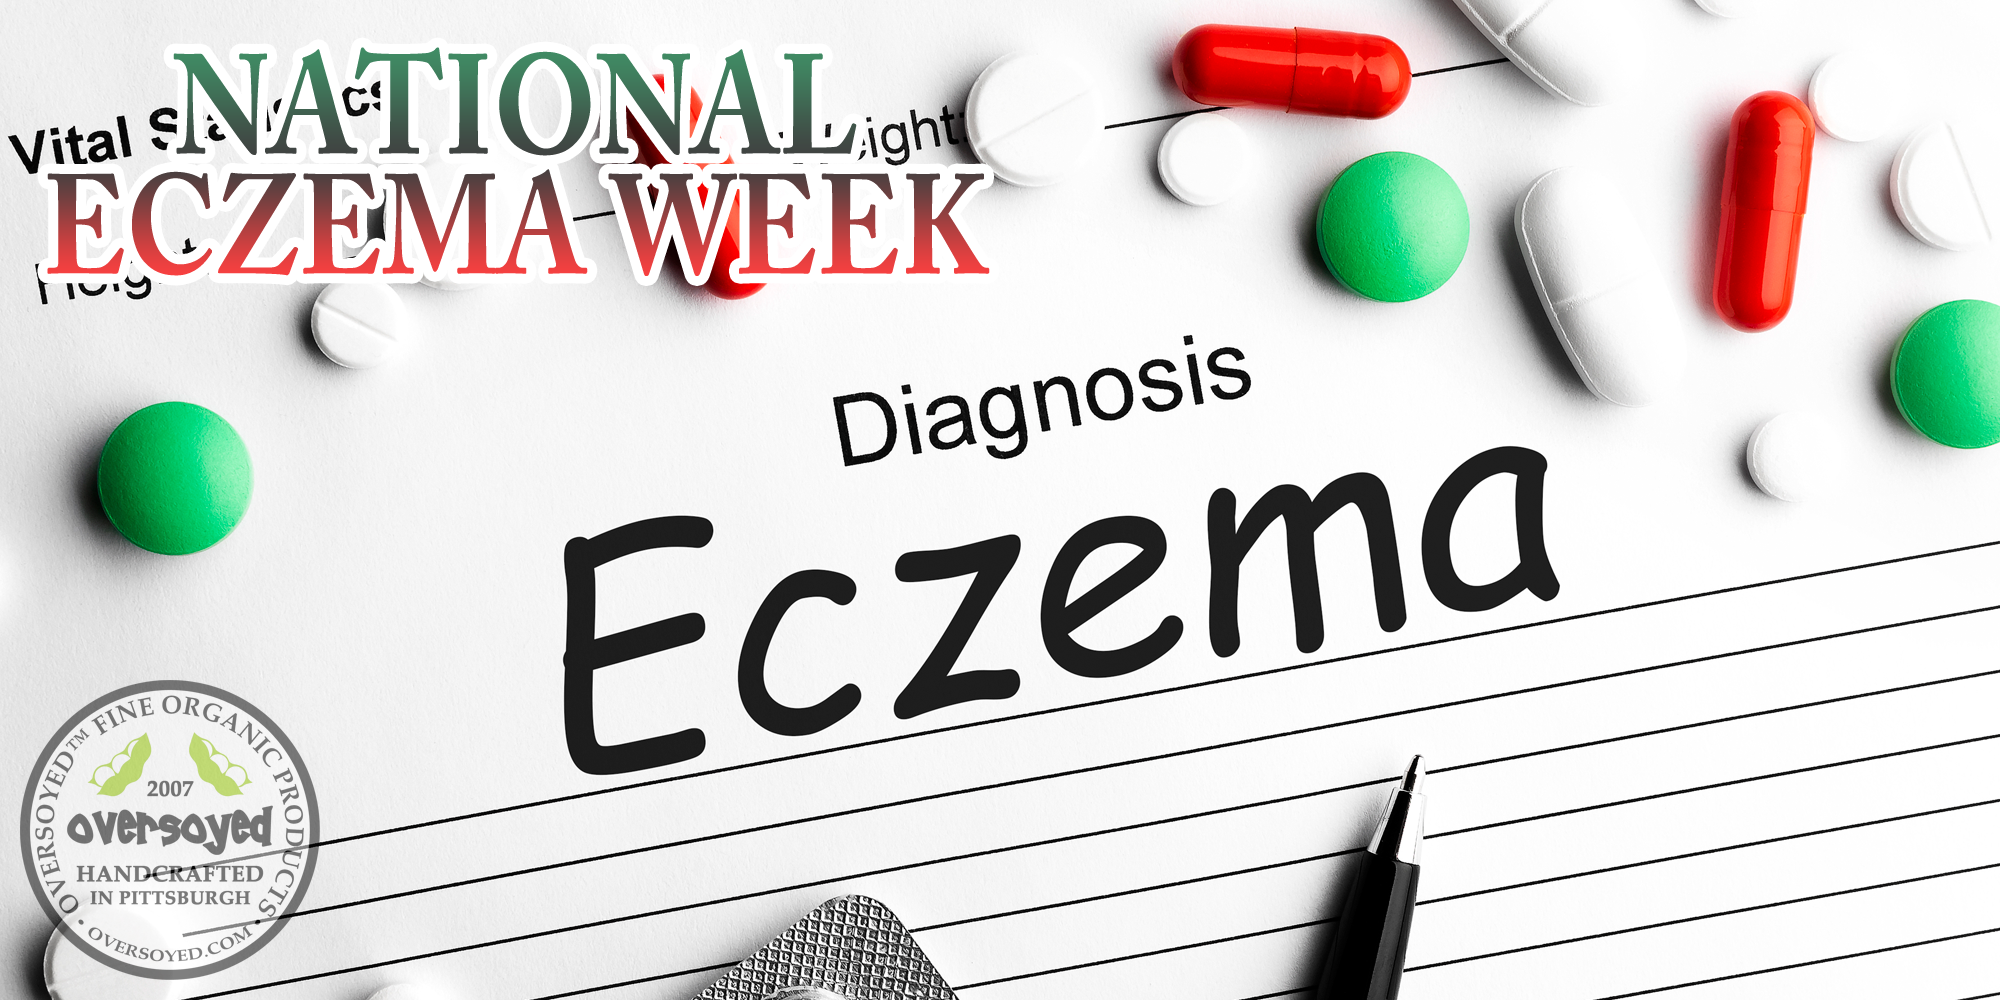 OverSoyed Fine Organic Products - National Eczema Week